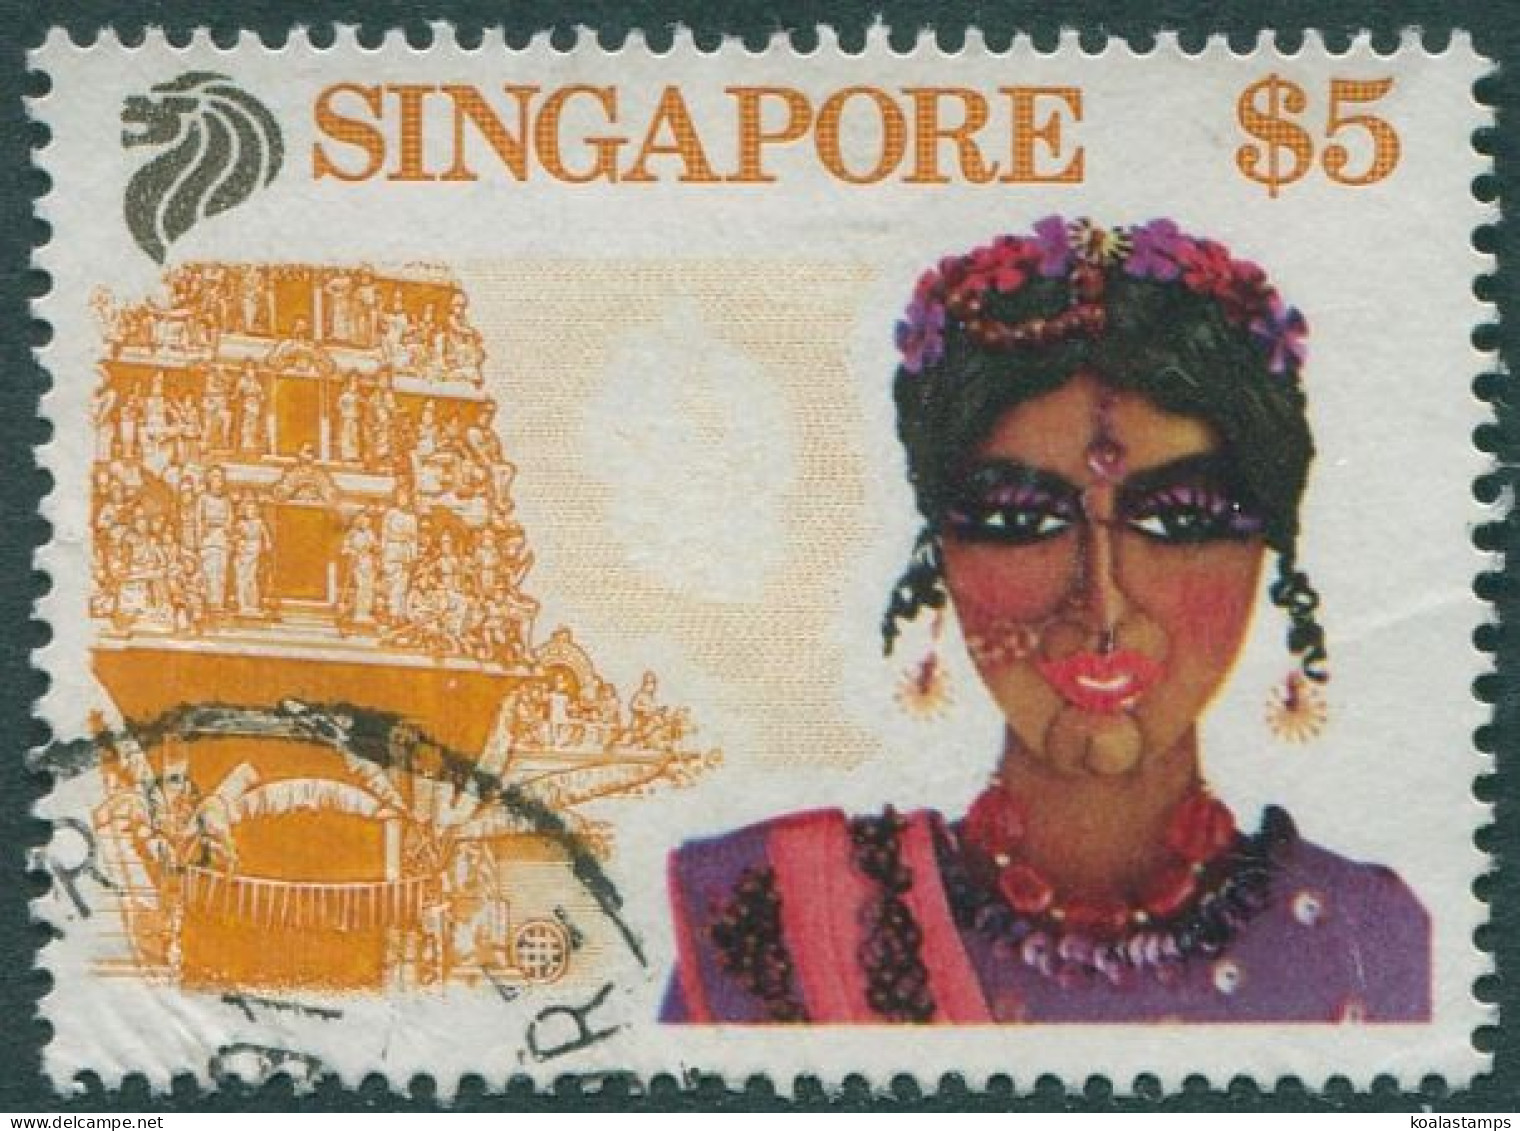 Singapore 1990 SG635 $5 Indian Dancer And Temple FU - Singapore (1959-...)